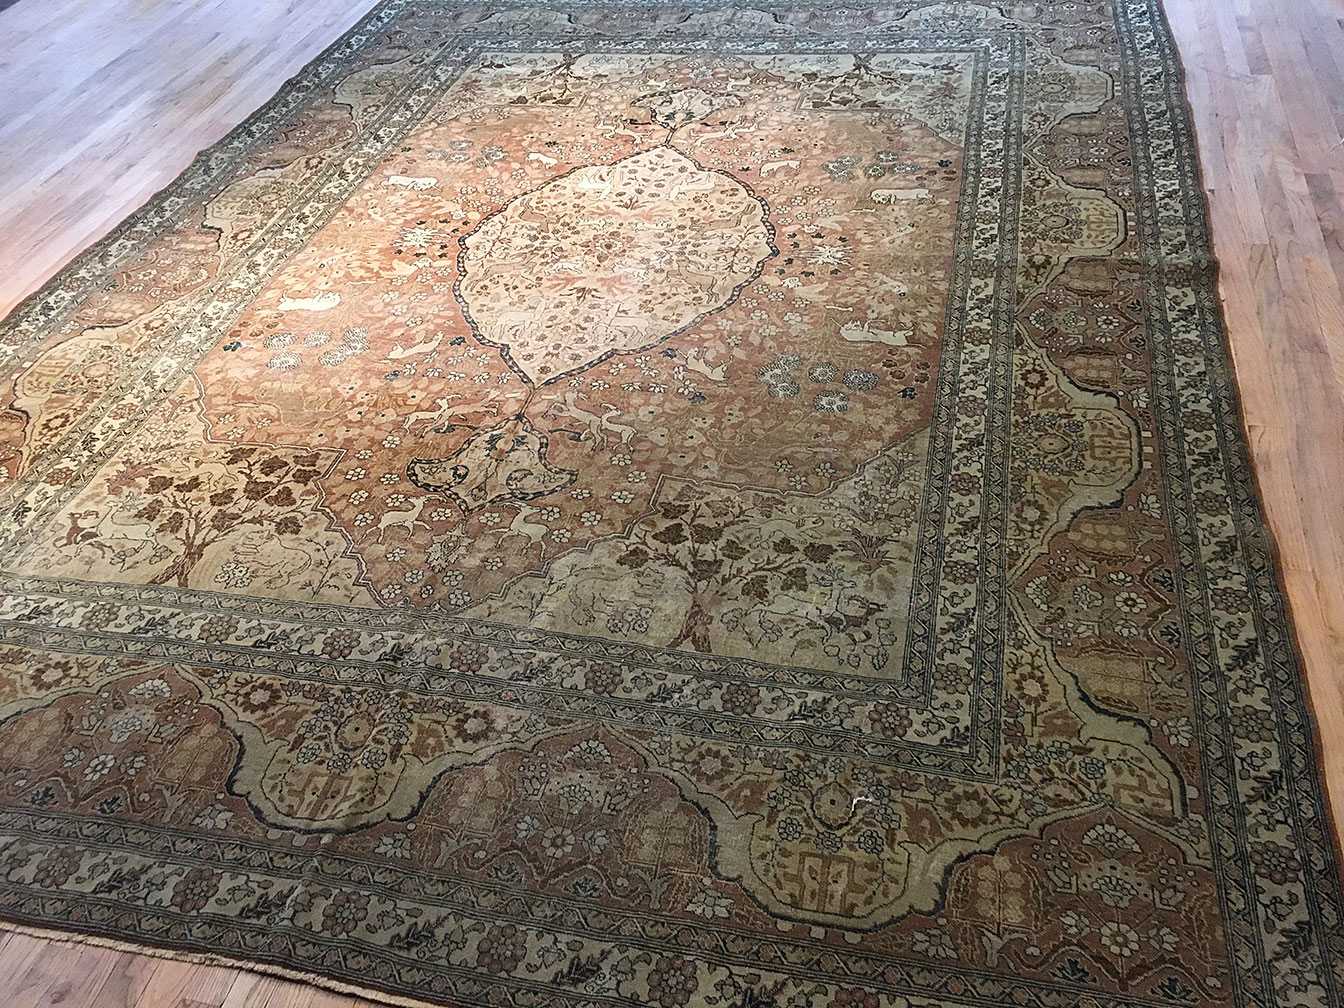 Antique tabriz Carpet - # 53071